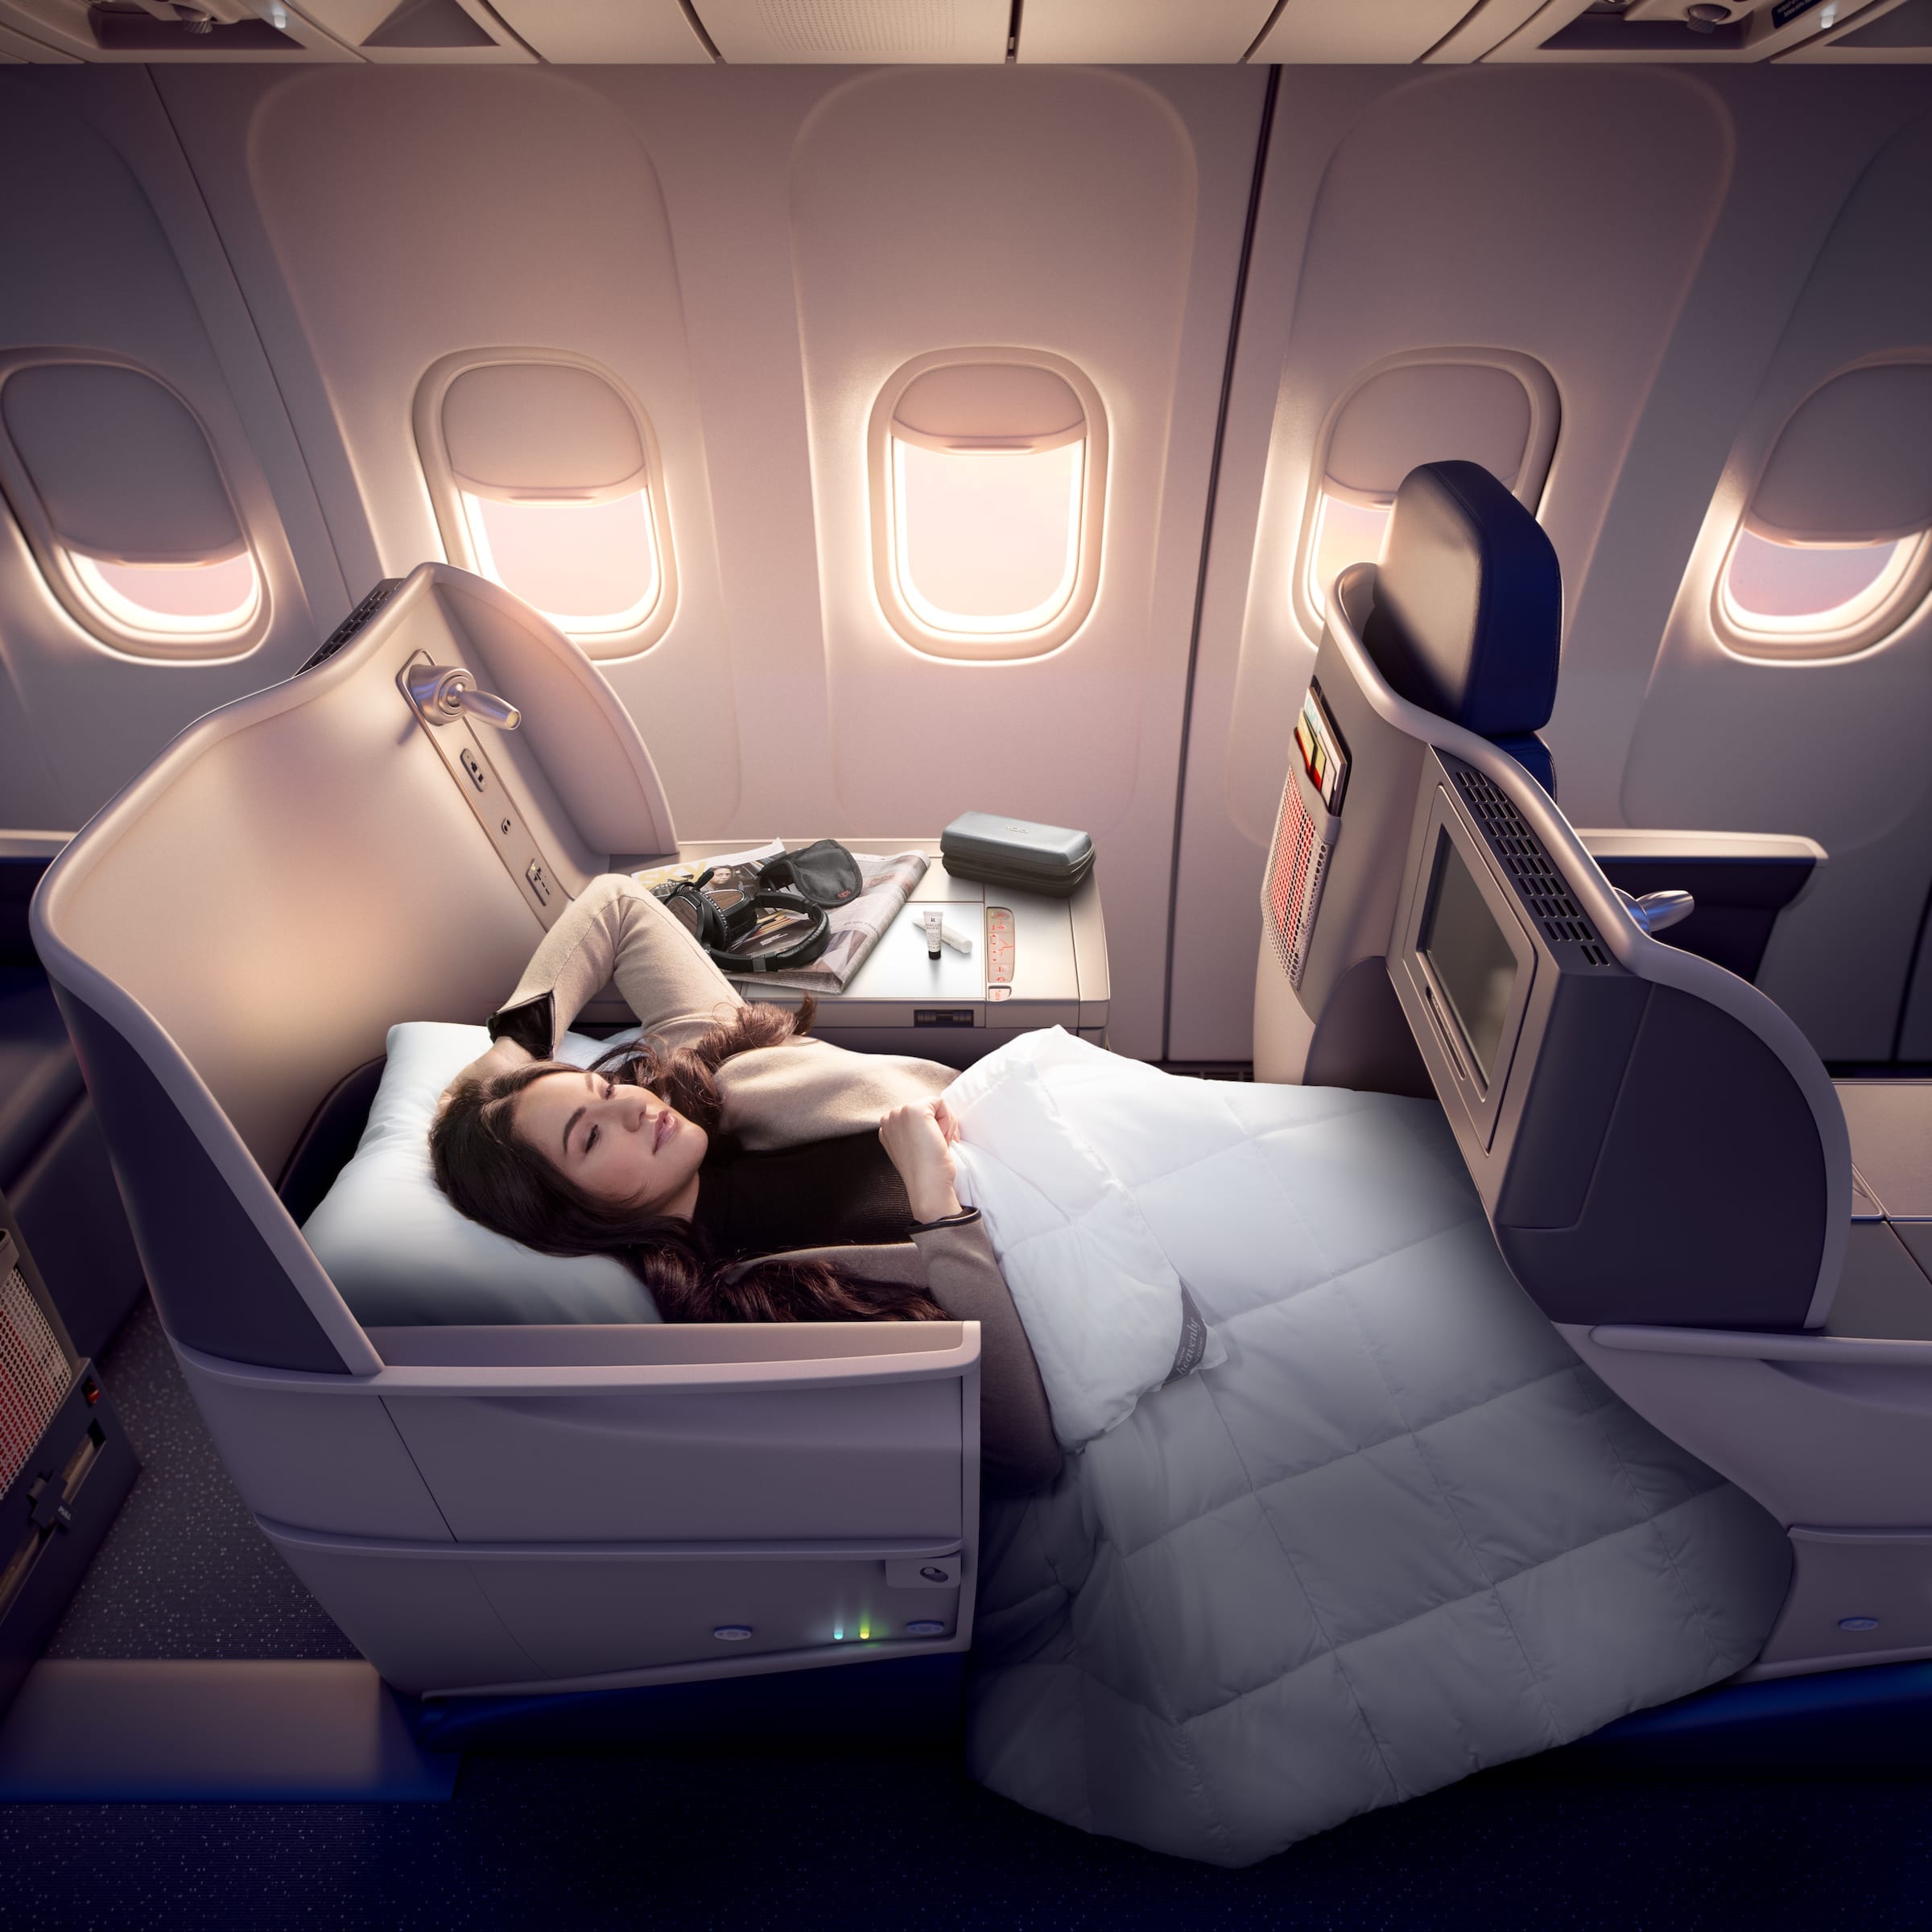 $797+ Transcontinental US Flat Bed Business Class Flights - Round Trip